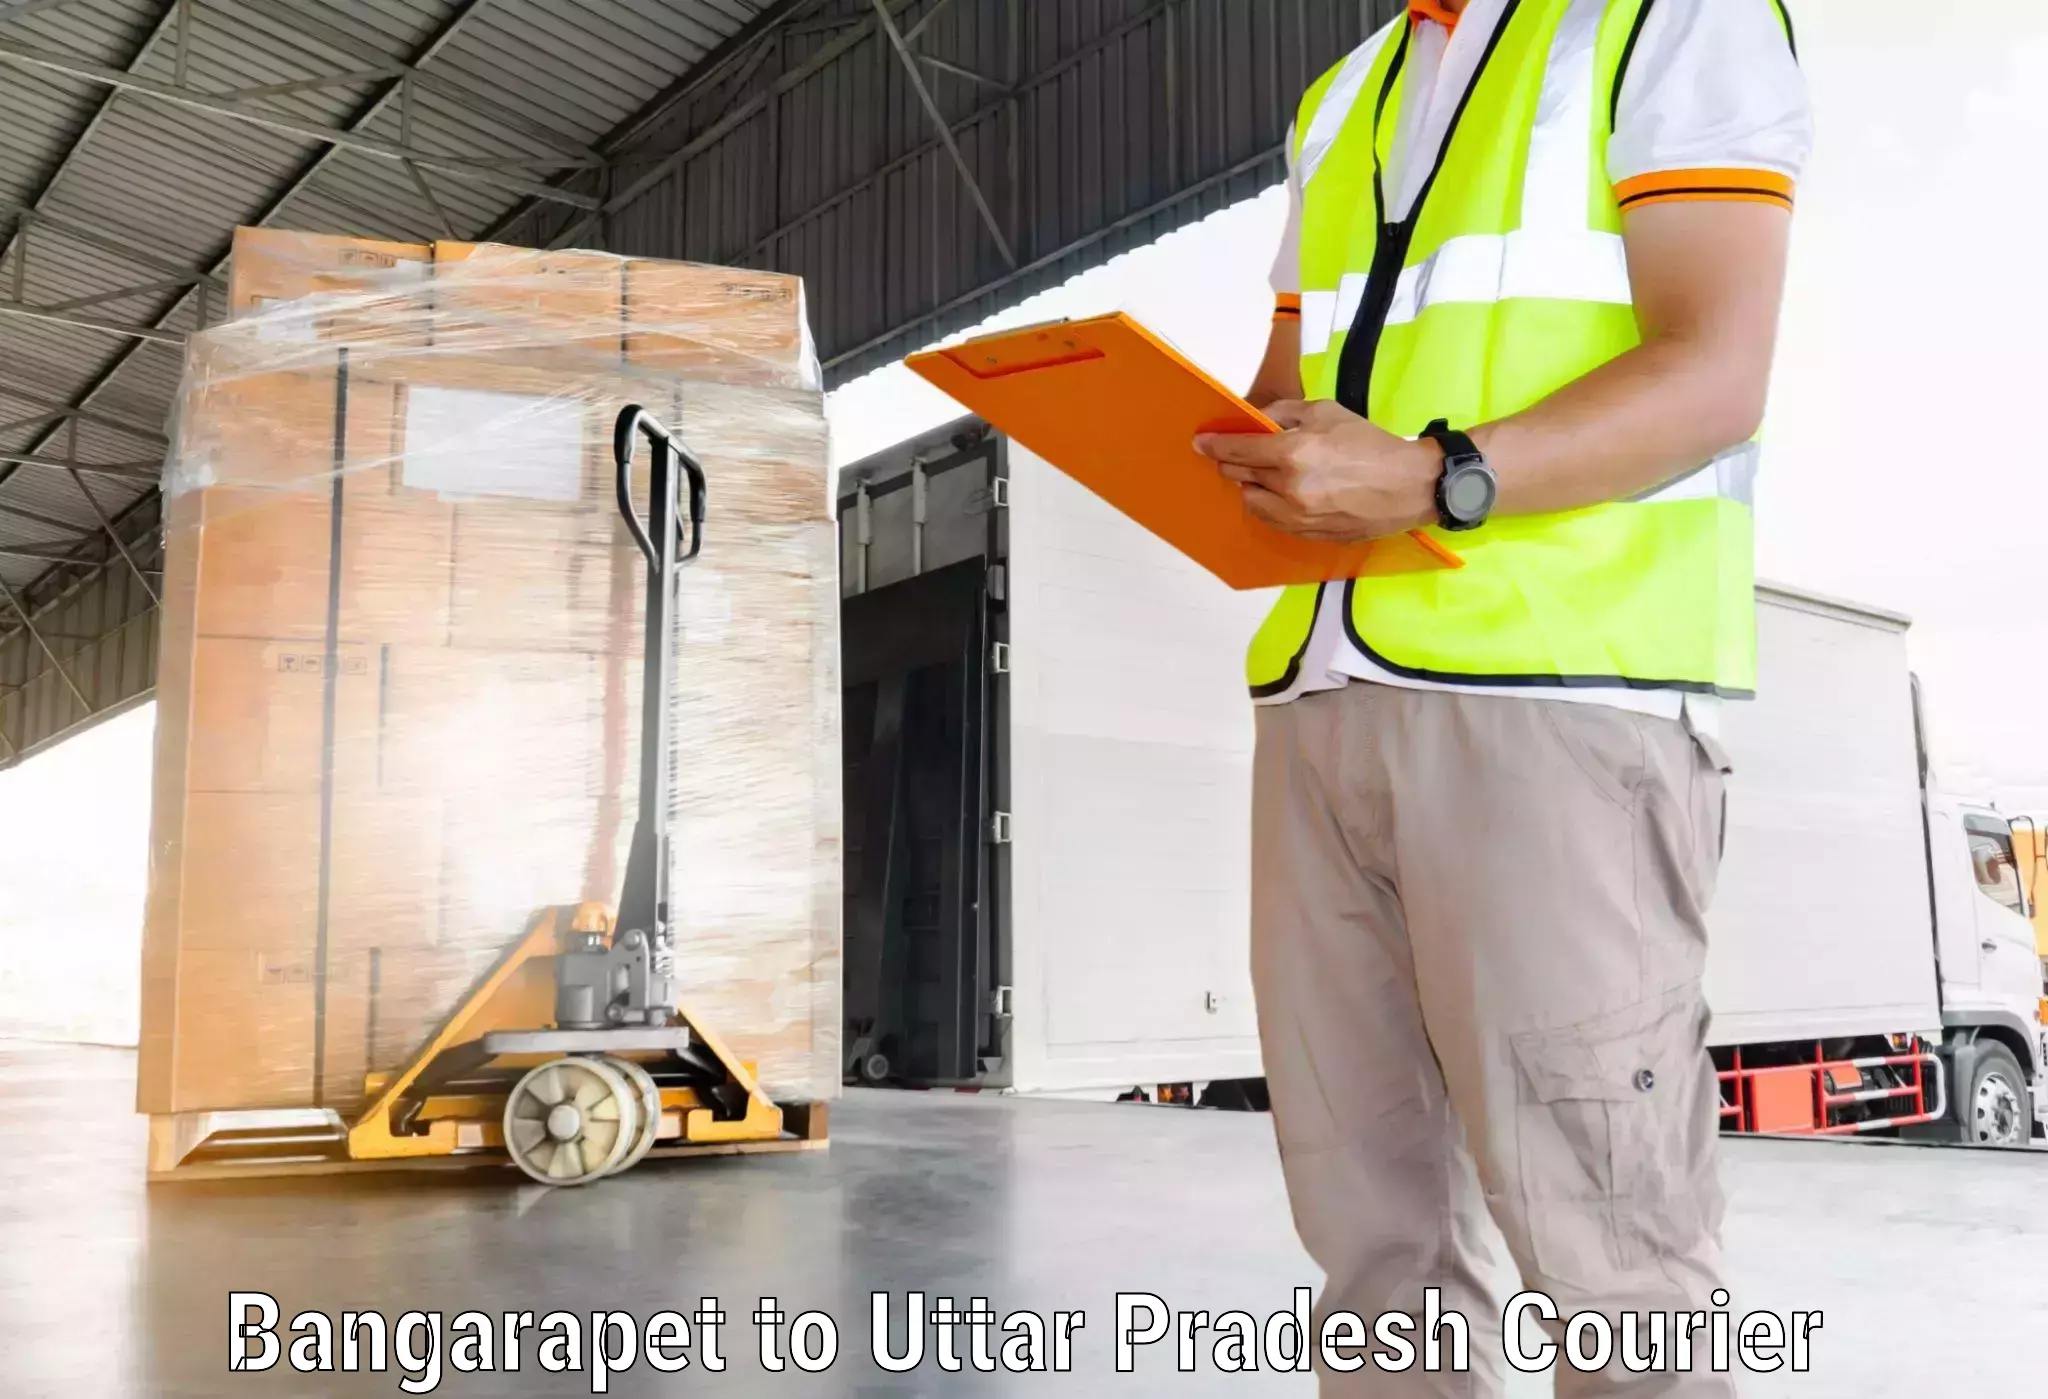 Delivery service partnership Bangarapet to Kanth